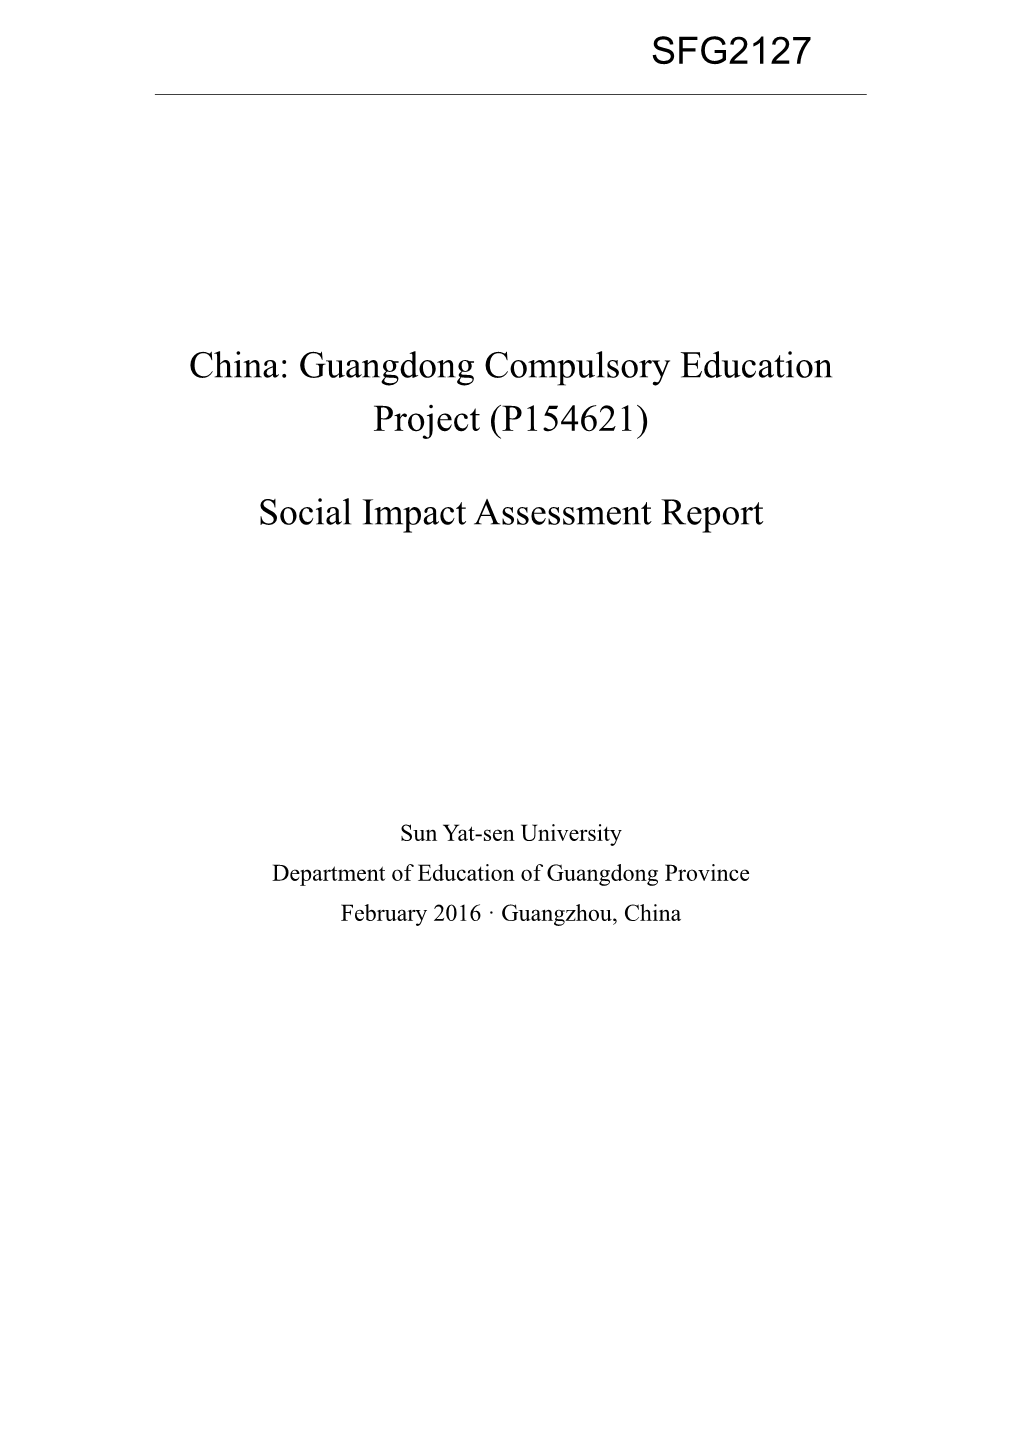 China: Guangdong Compulsory Education Project (P154621) Social Impact Assessment Report